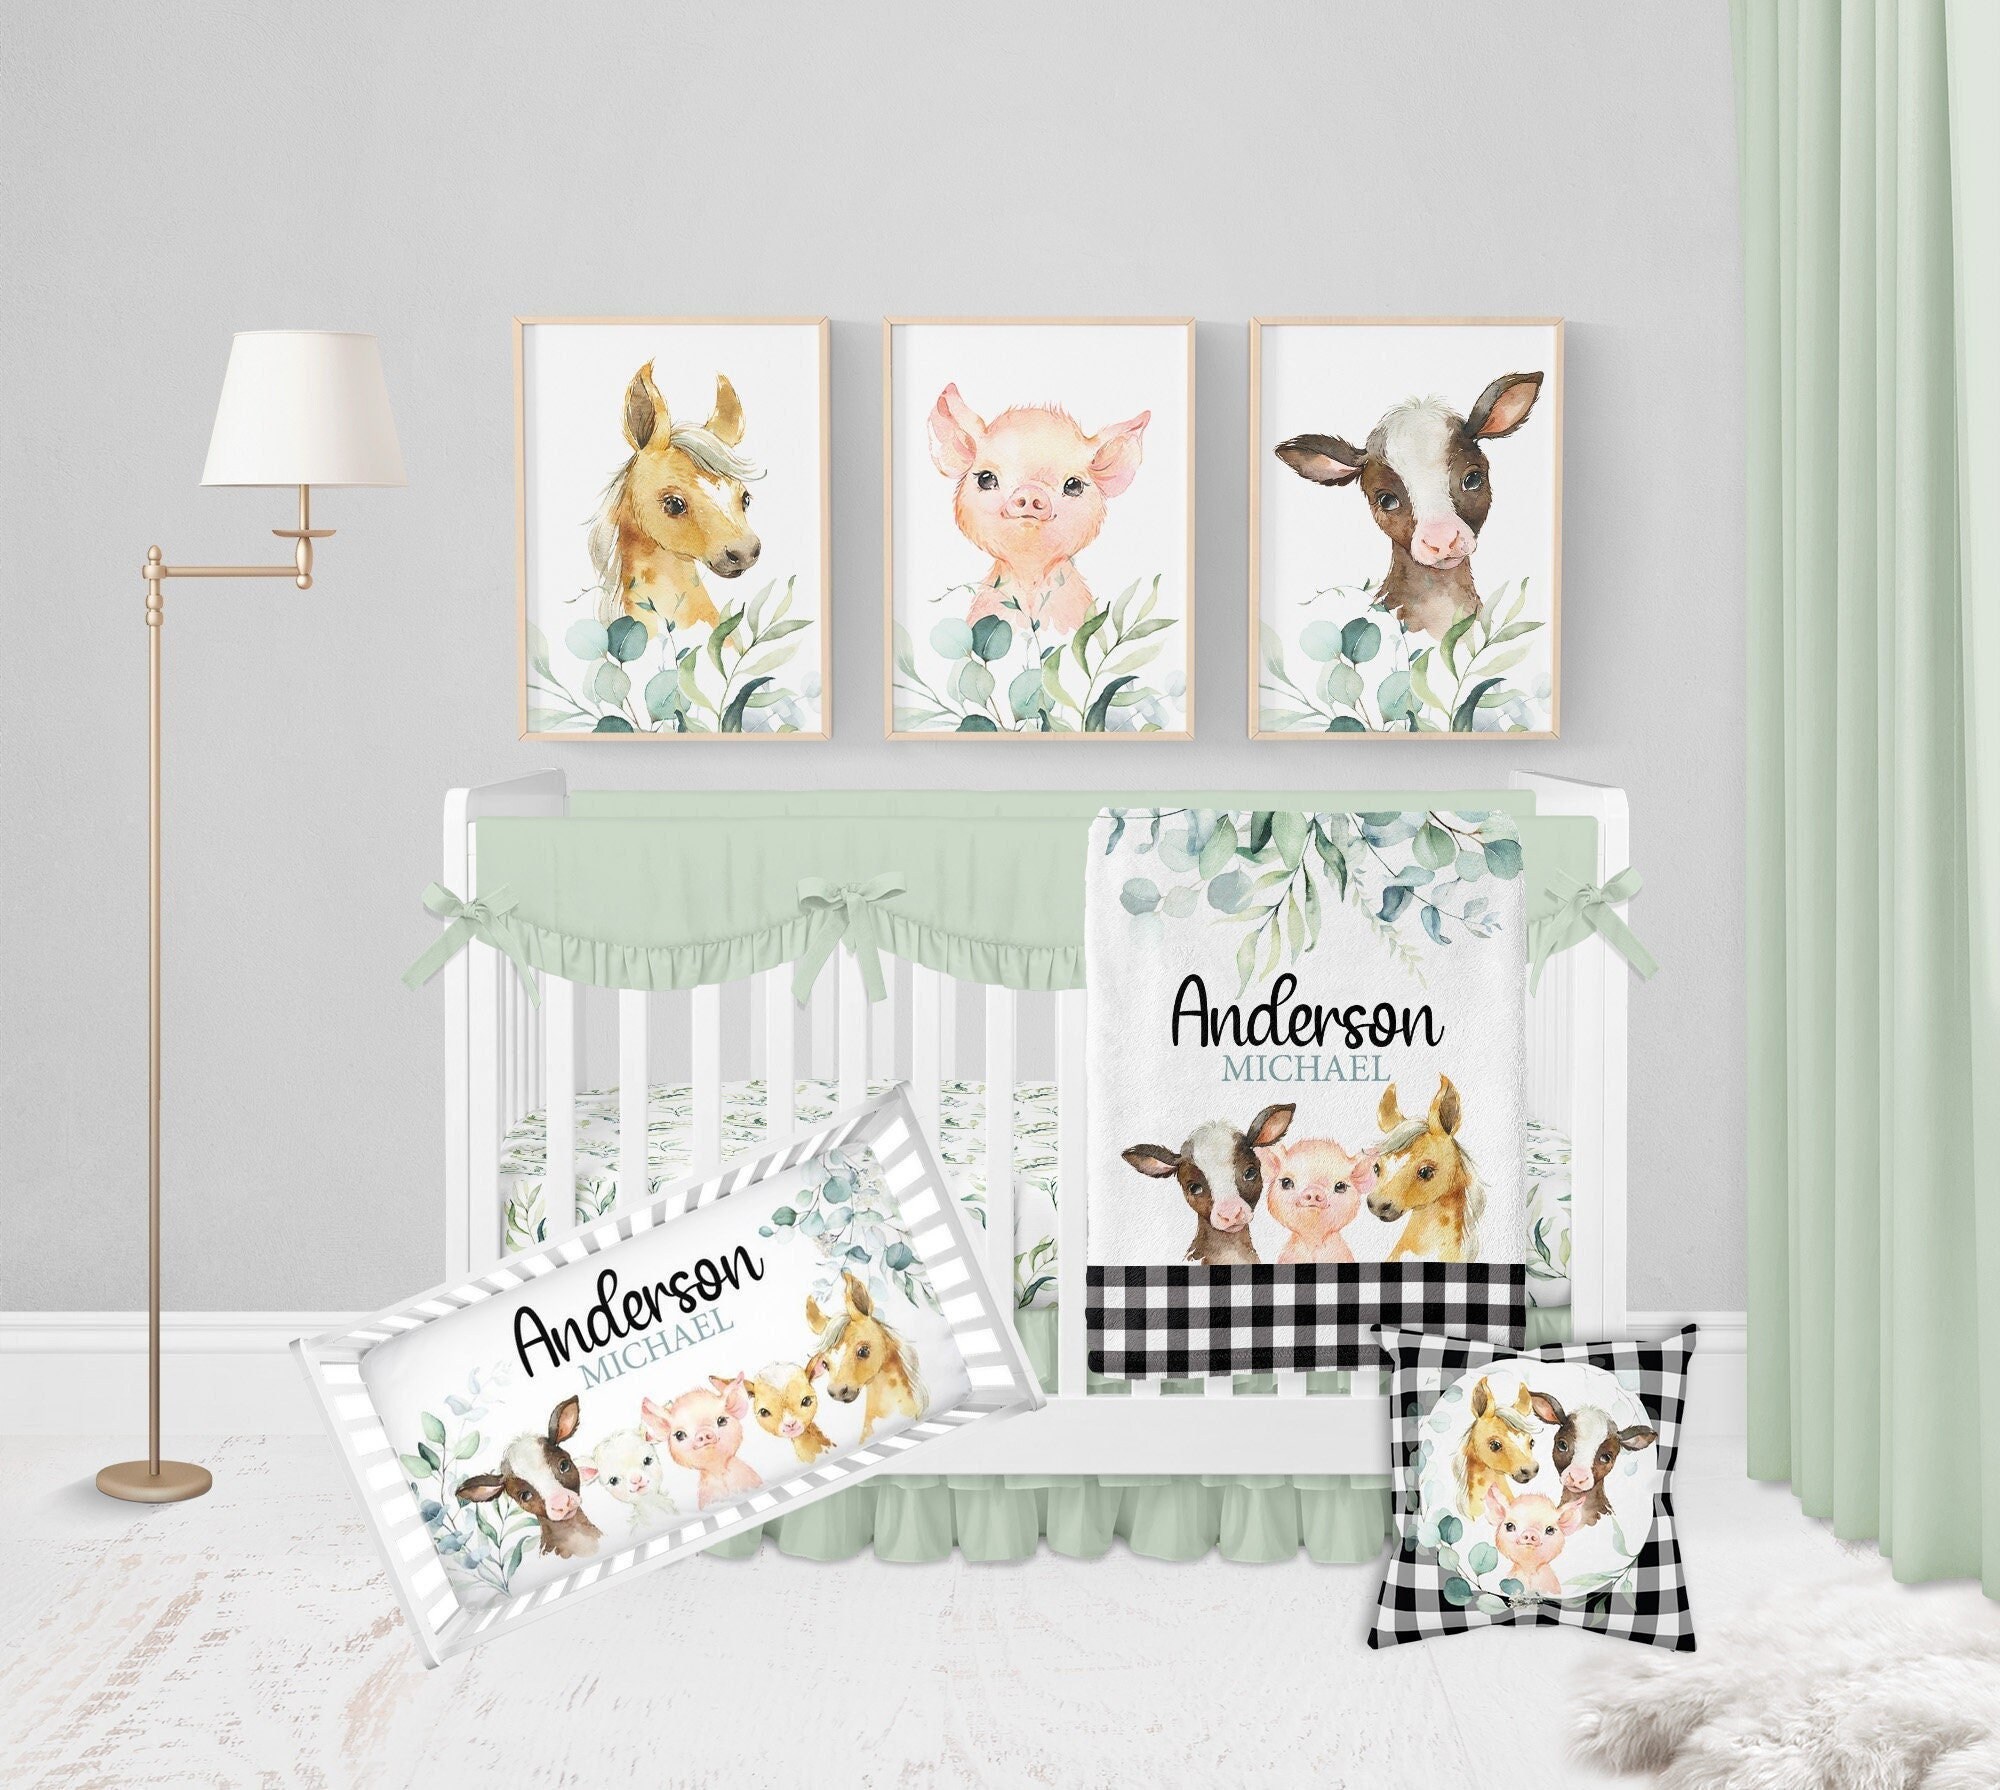 90 Darling Baby Nursery Ideas (Photos)  Wood crib, Beige nursery, Baby  nursery